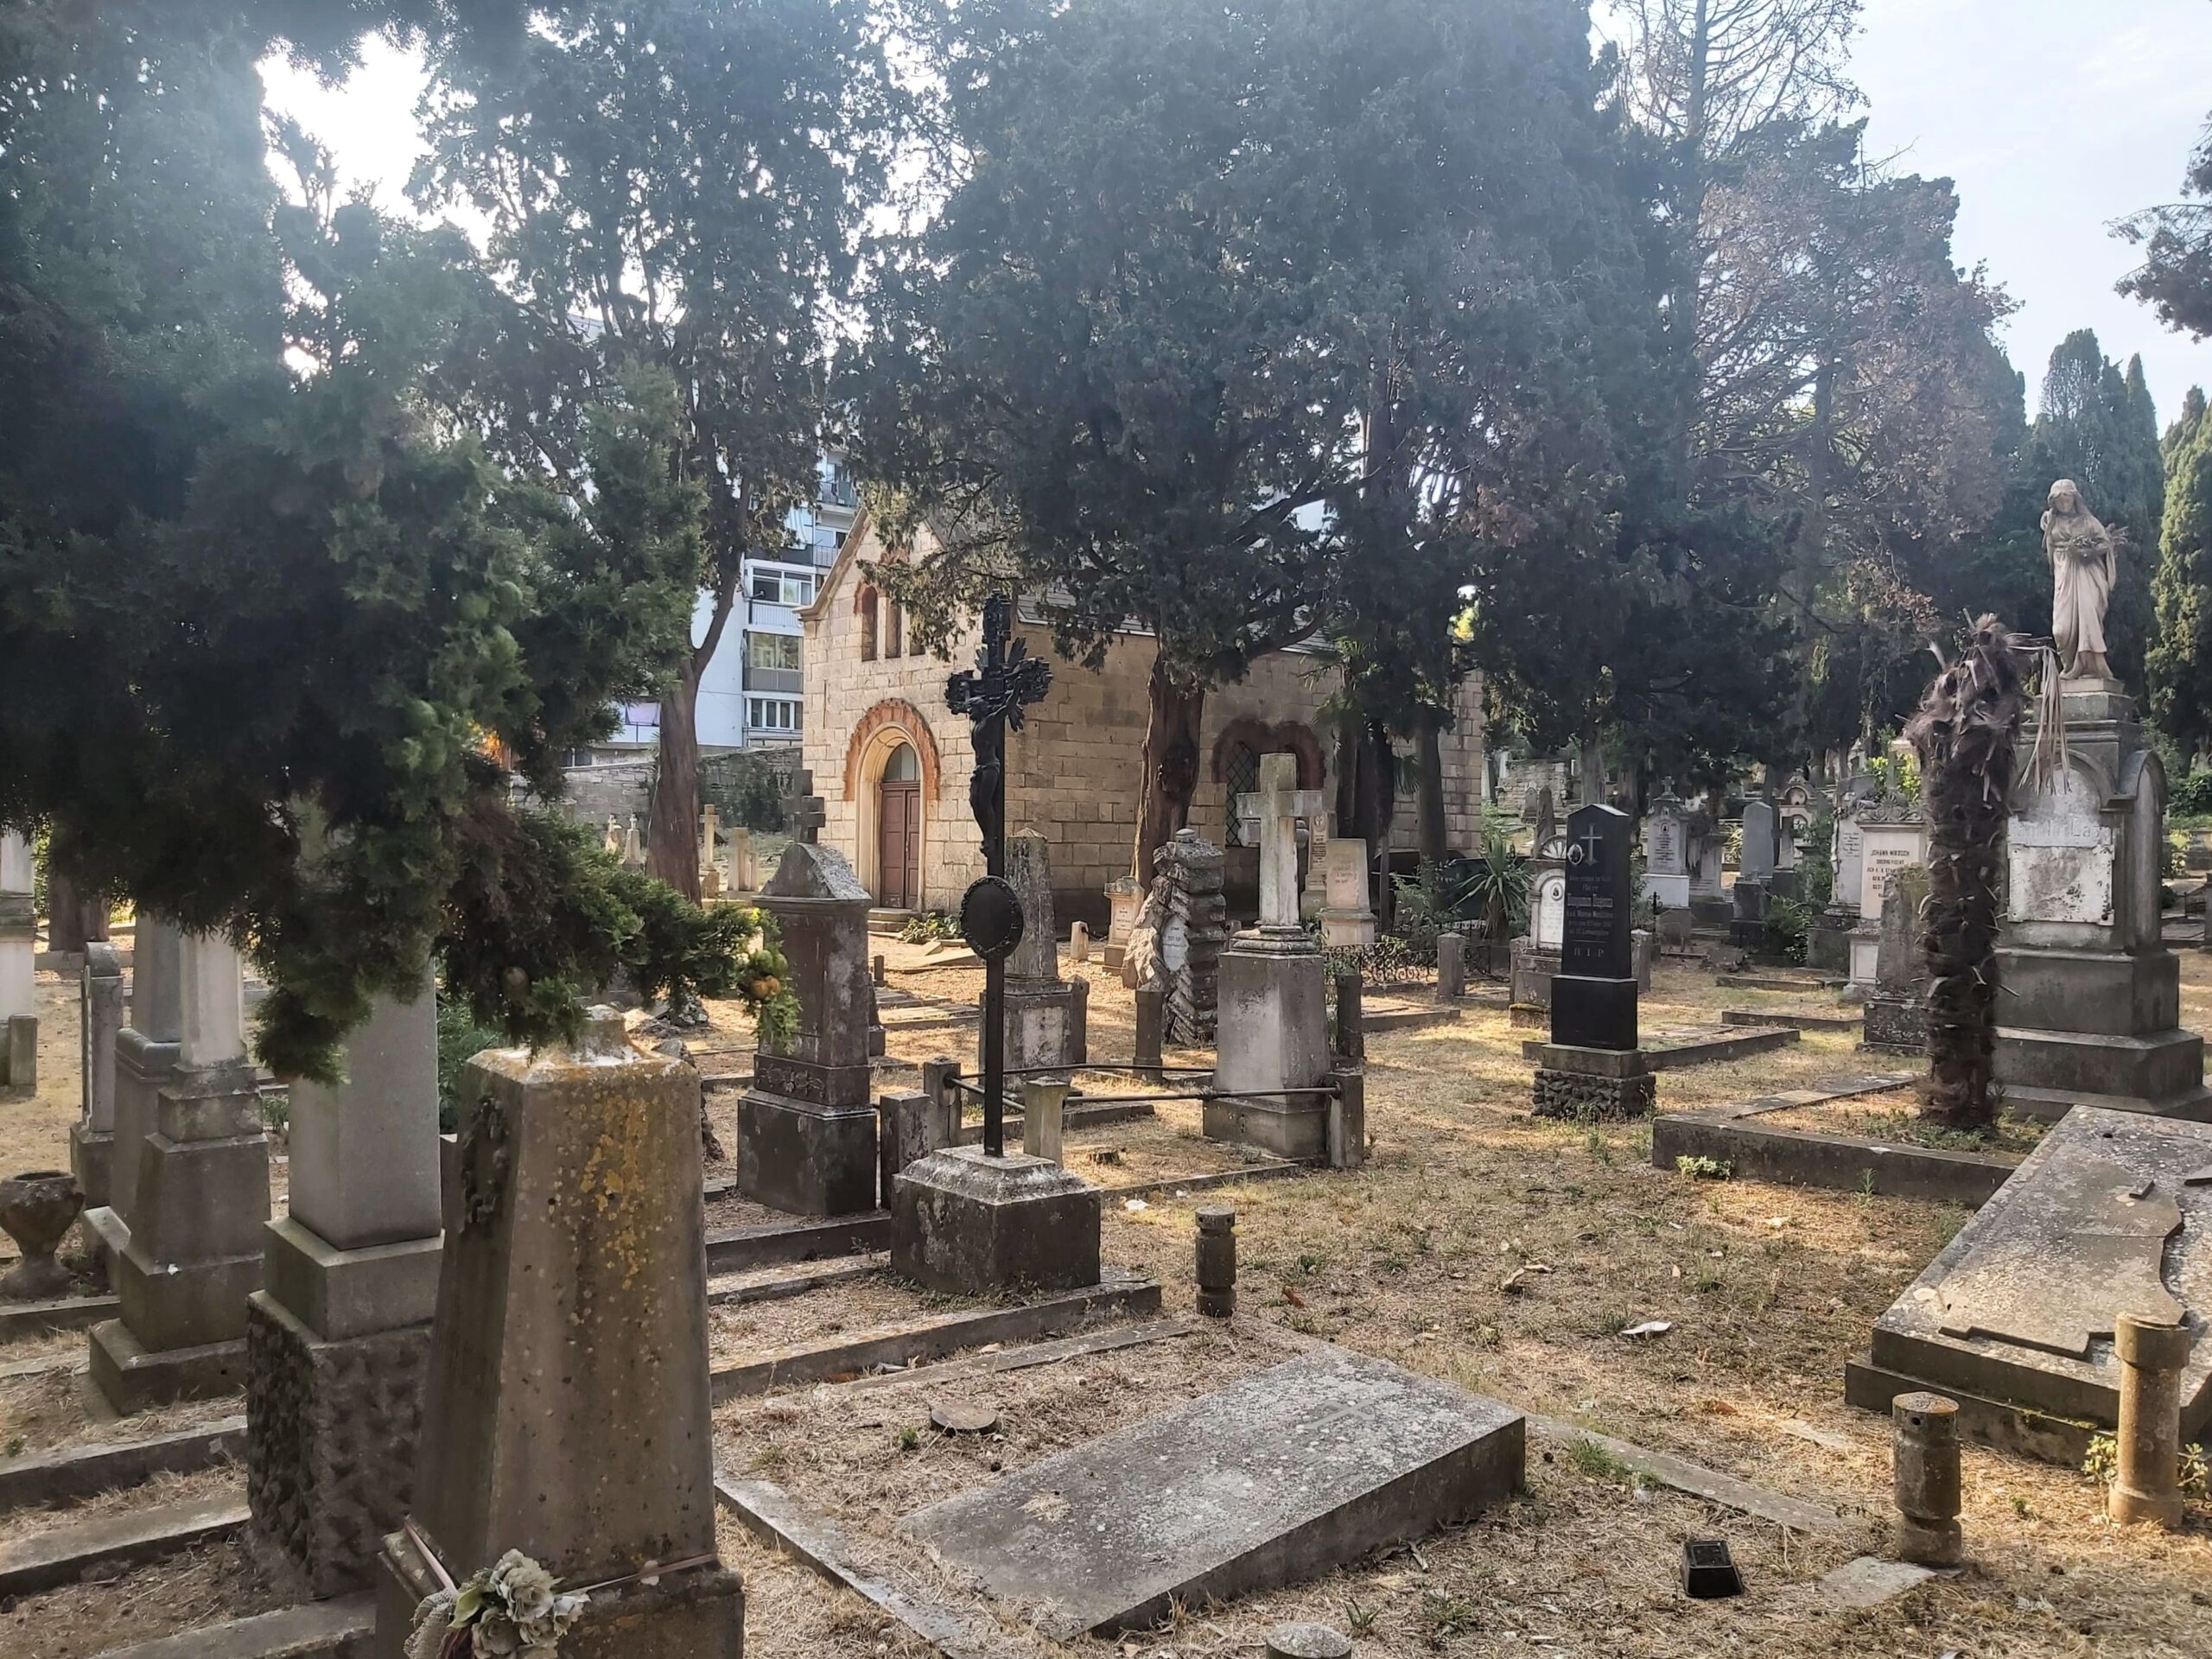 Interesting graves at churchyard in Pula, Croatia